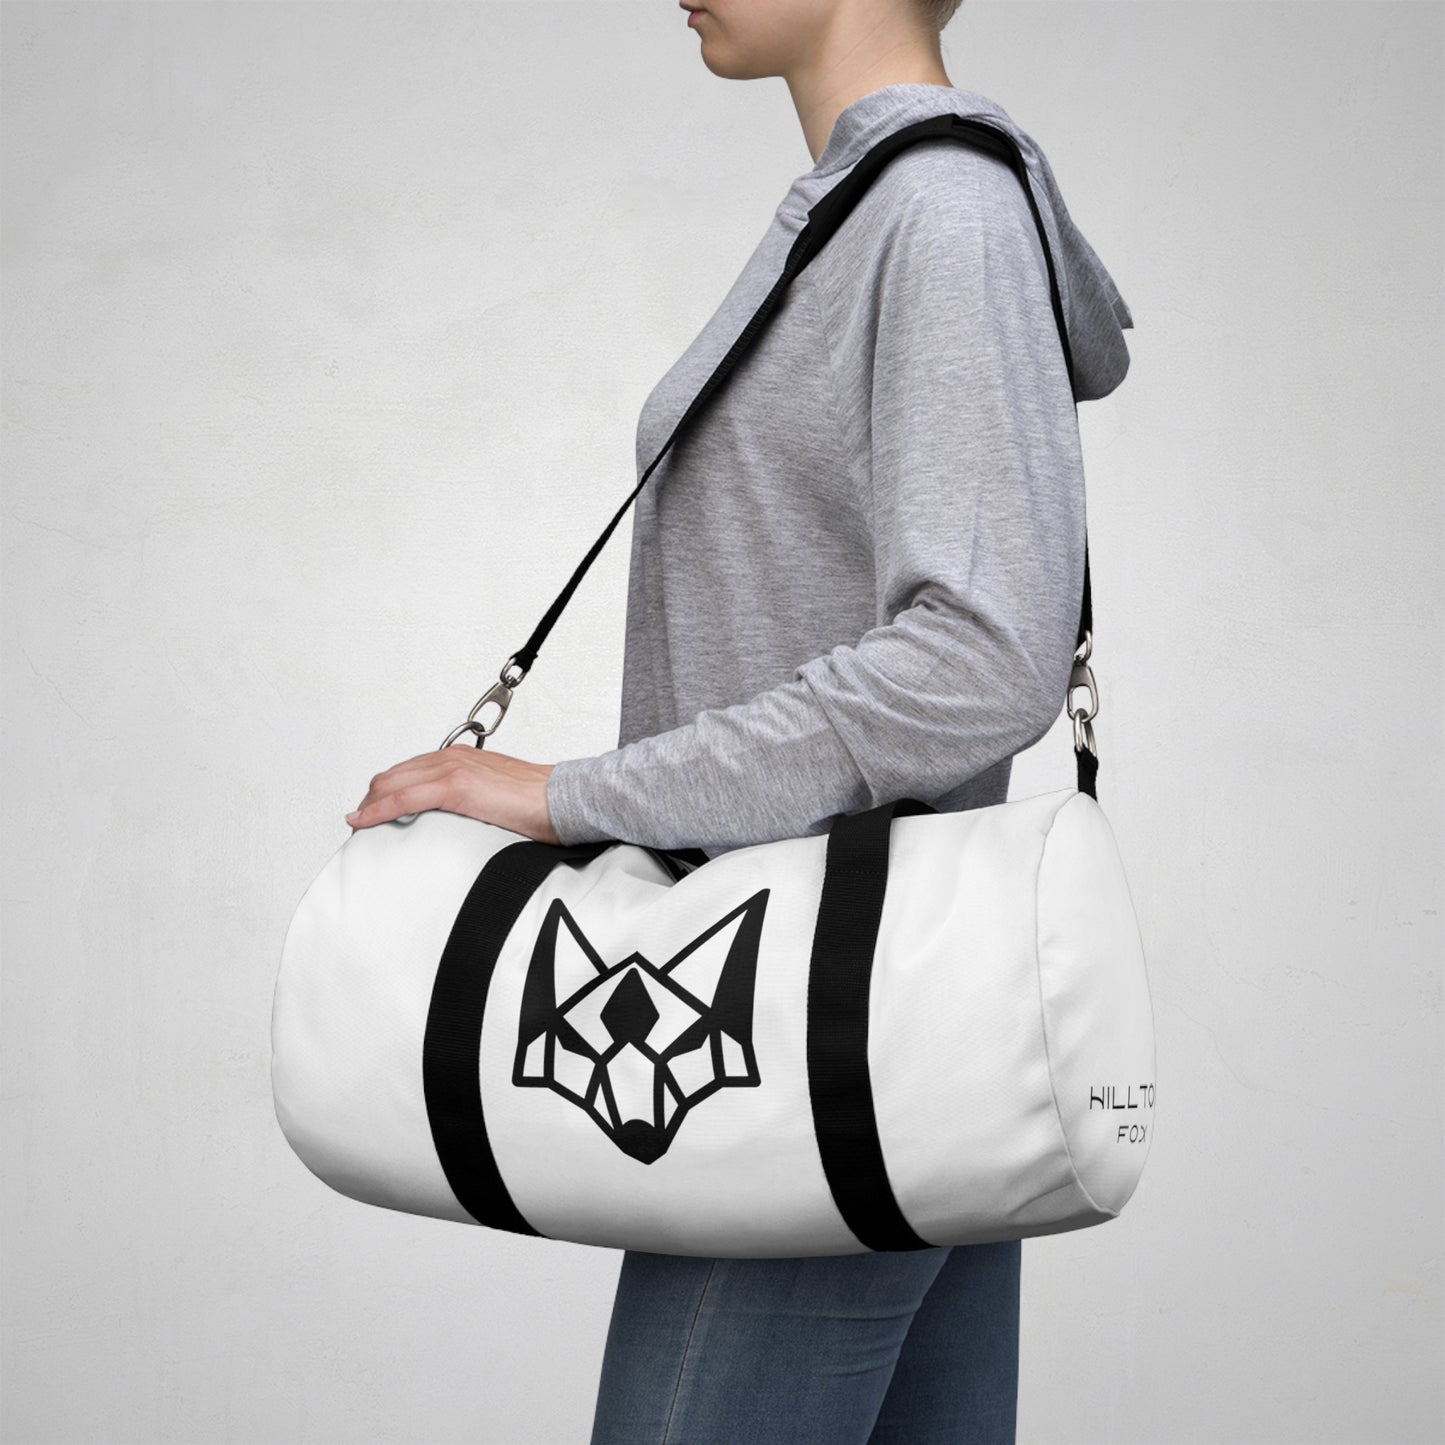 Duffle Bag by Hilltop Fox